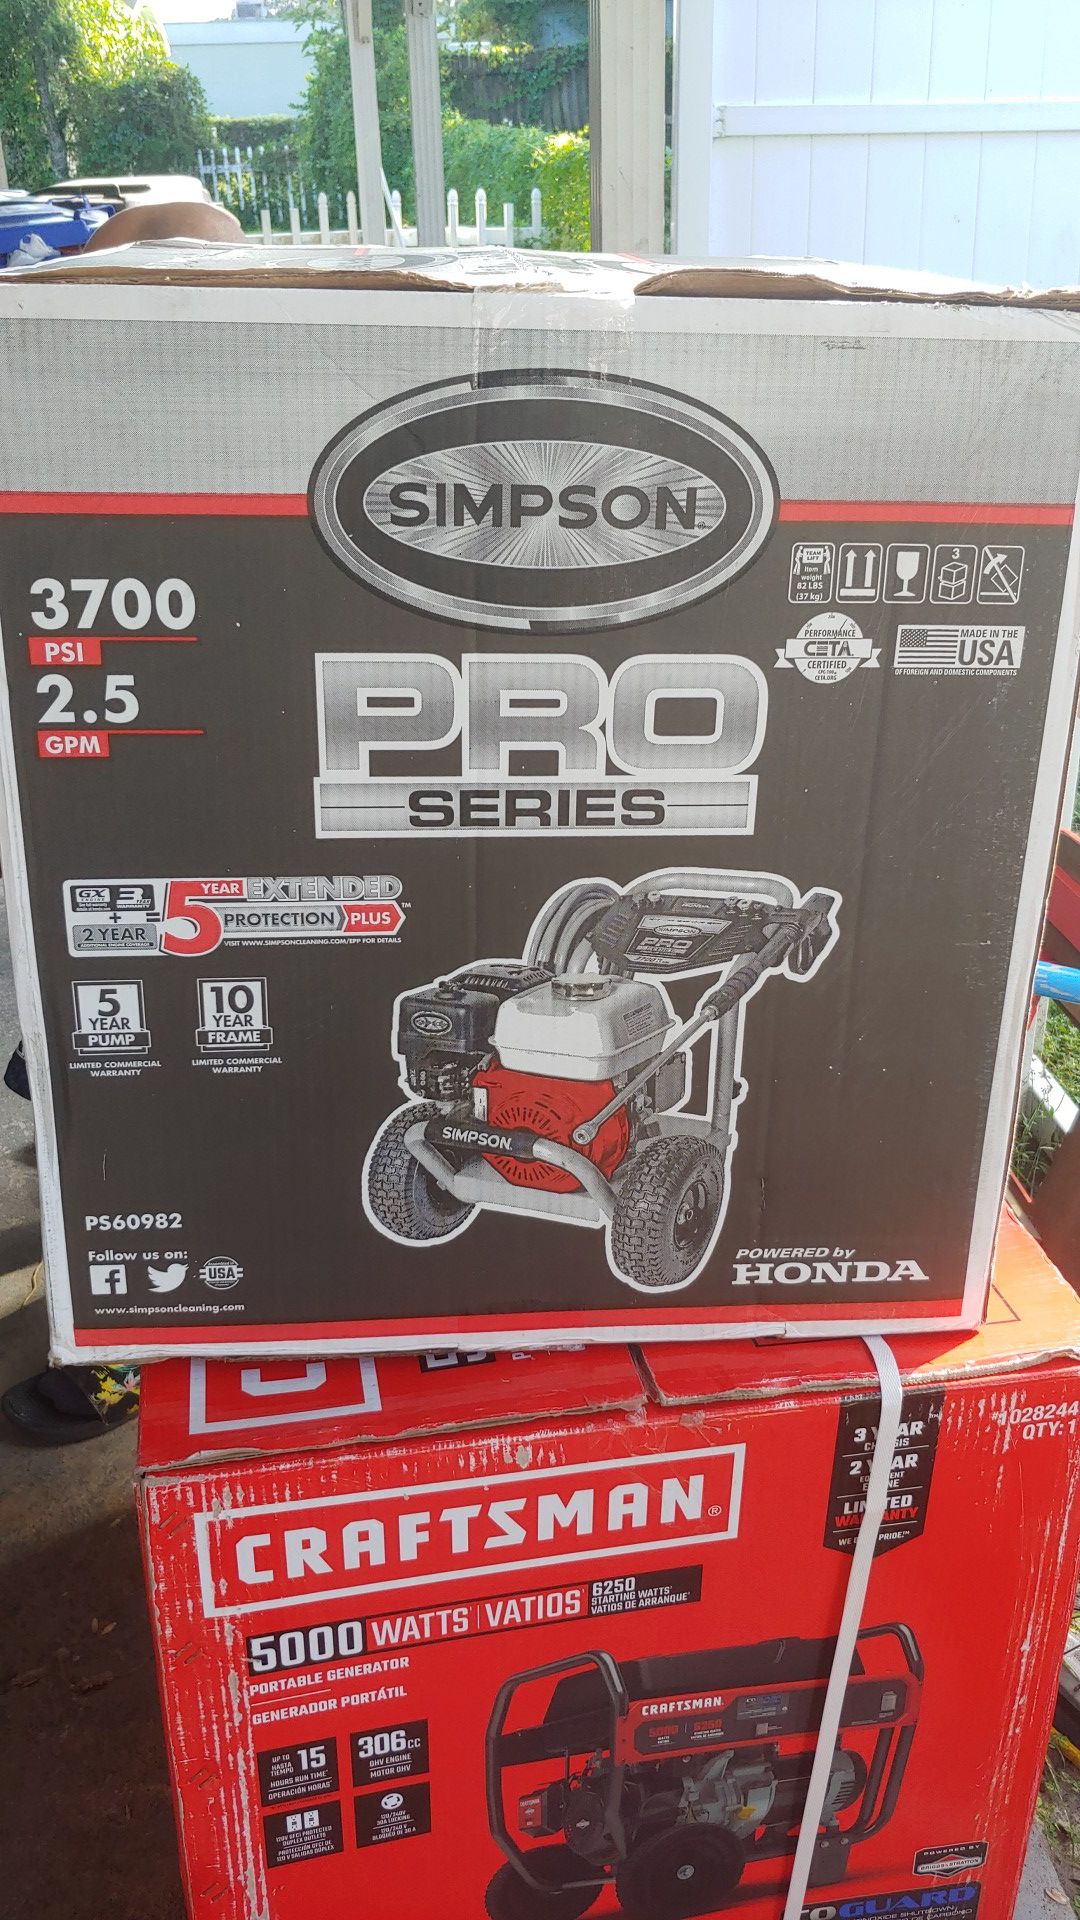 Simpson pro series pressure washer 3700 psi